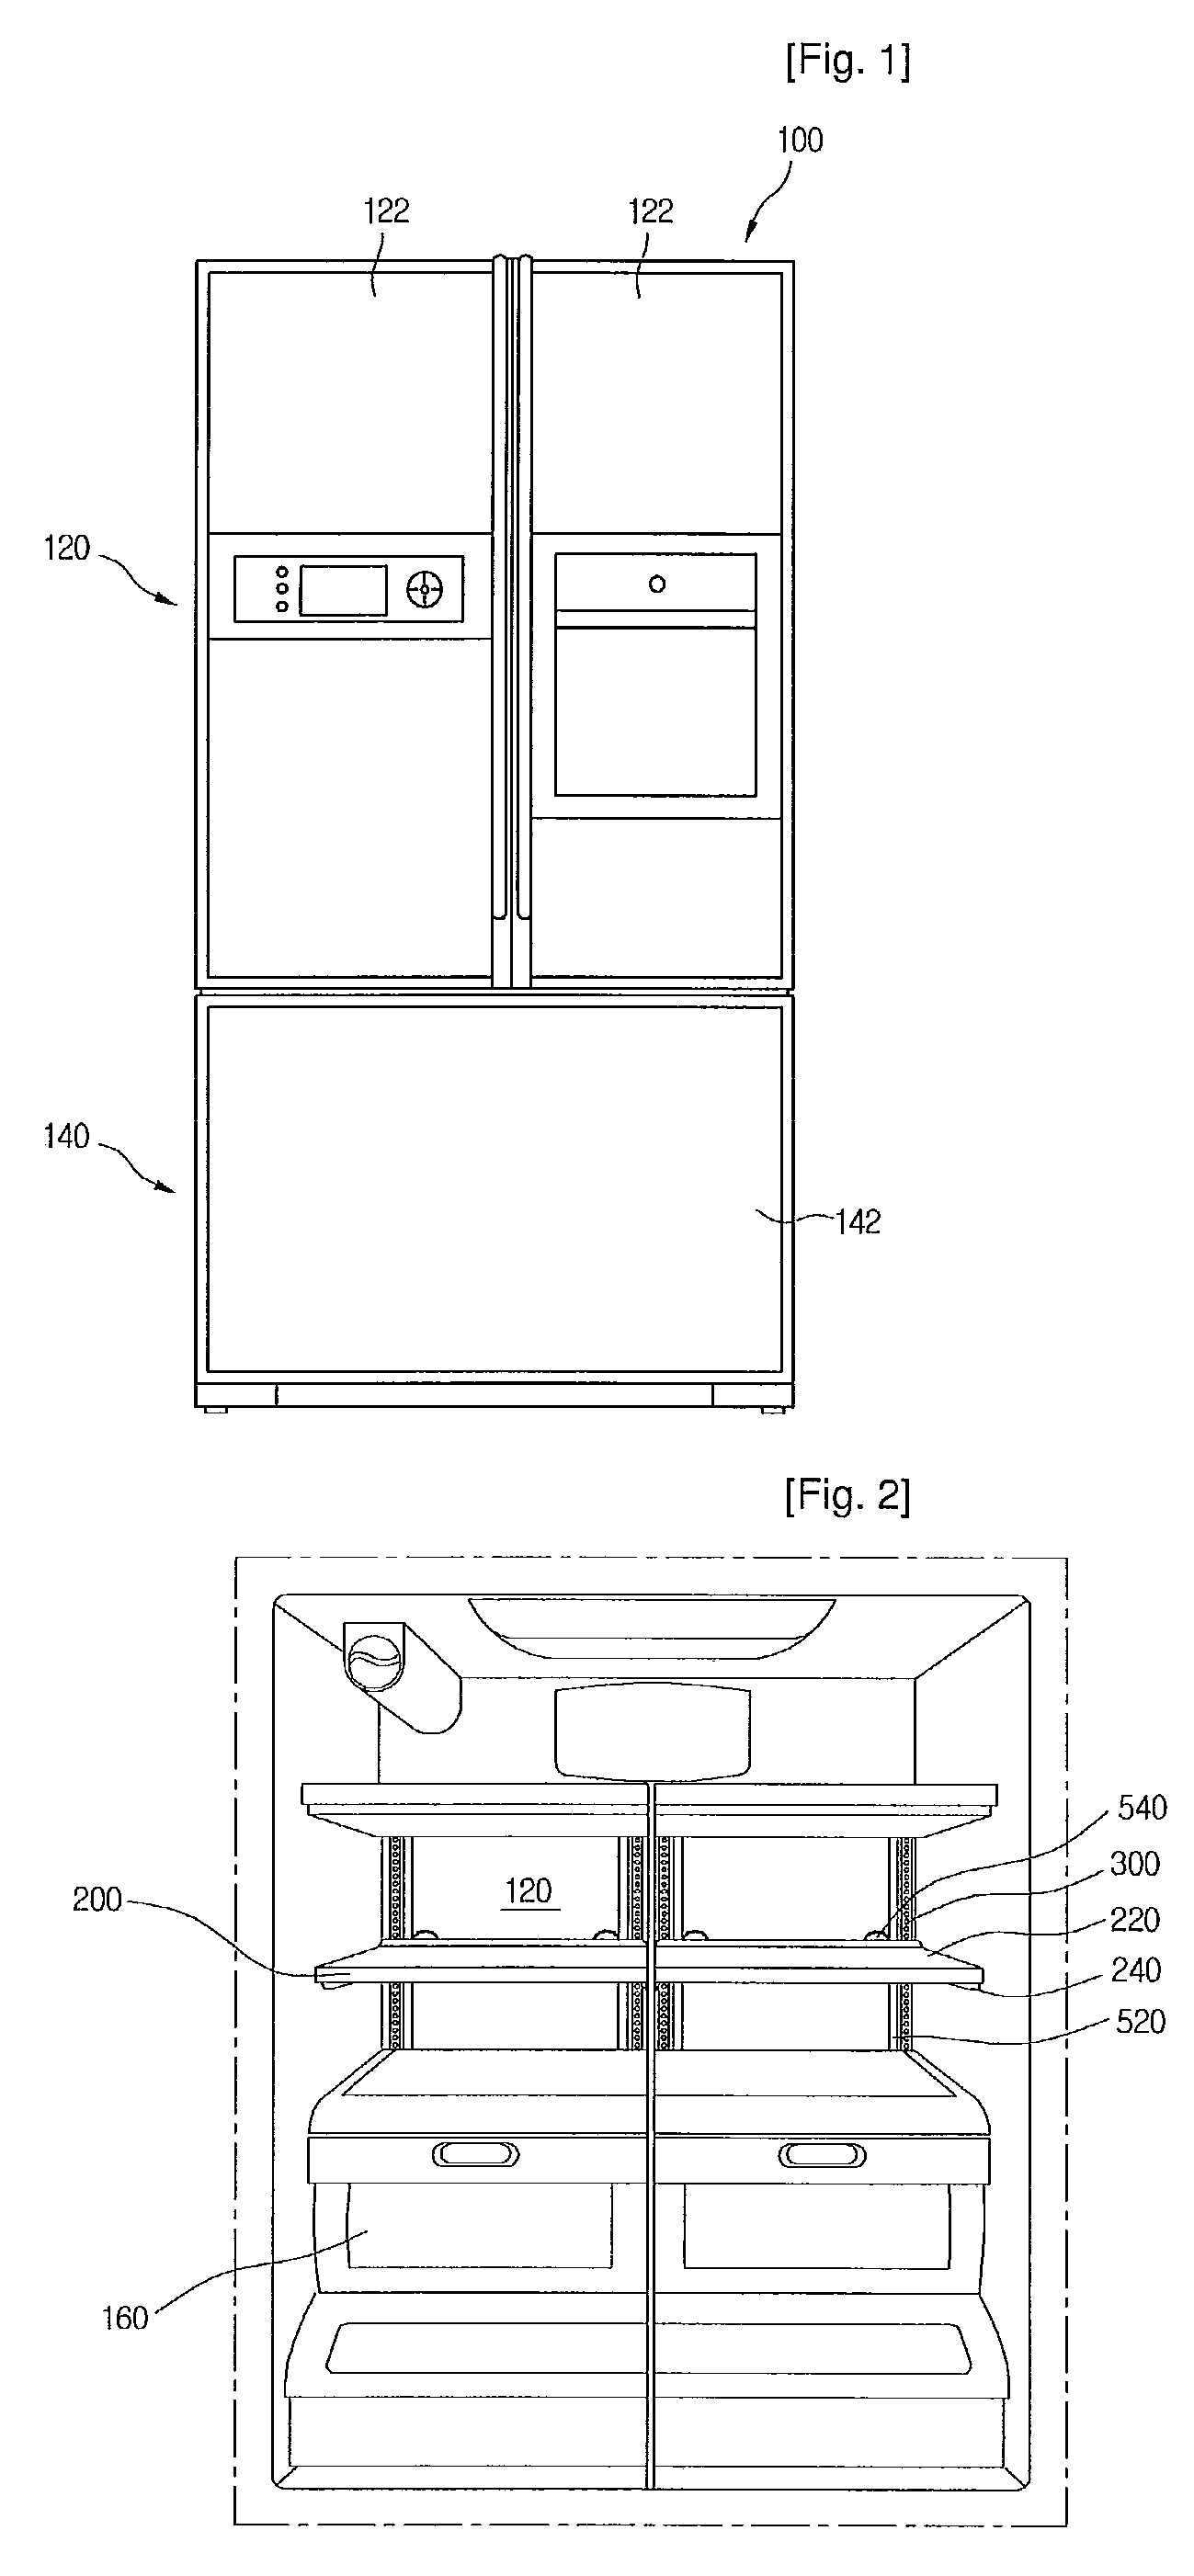 Elevation adjustment apparatus for shelf in refrigerator